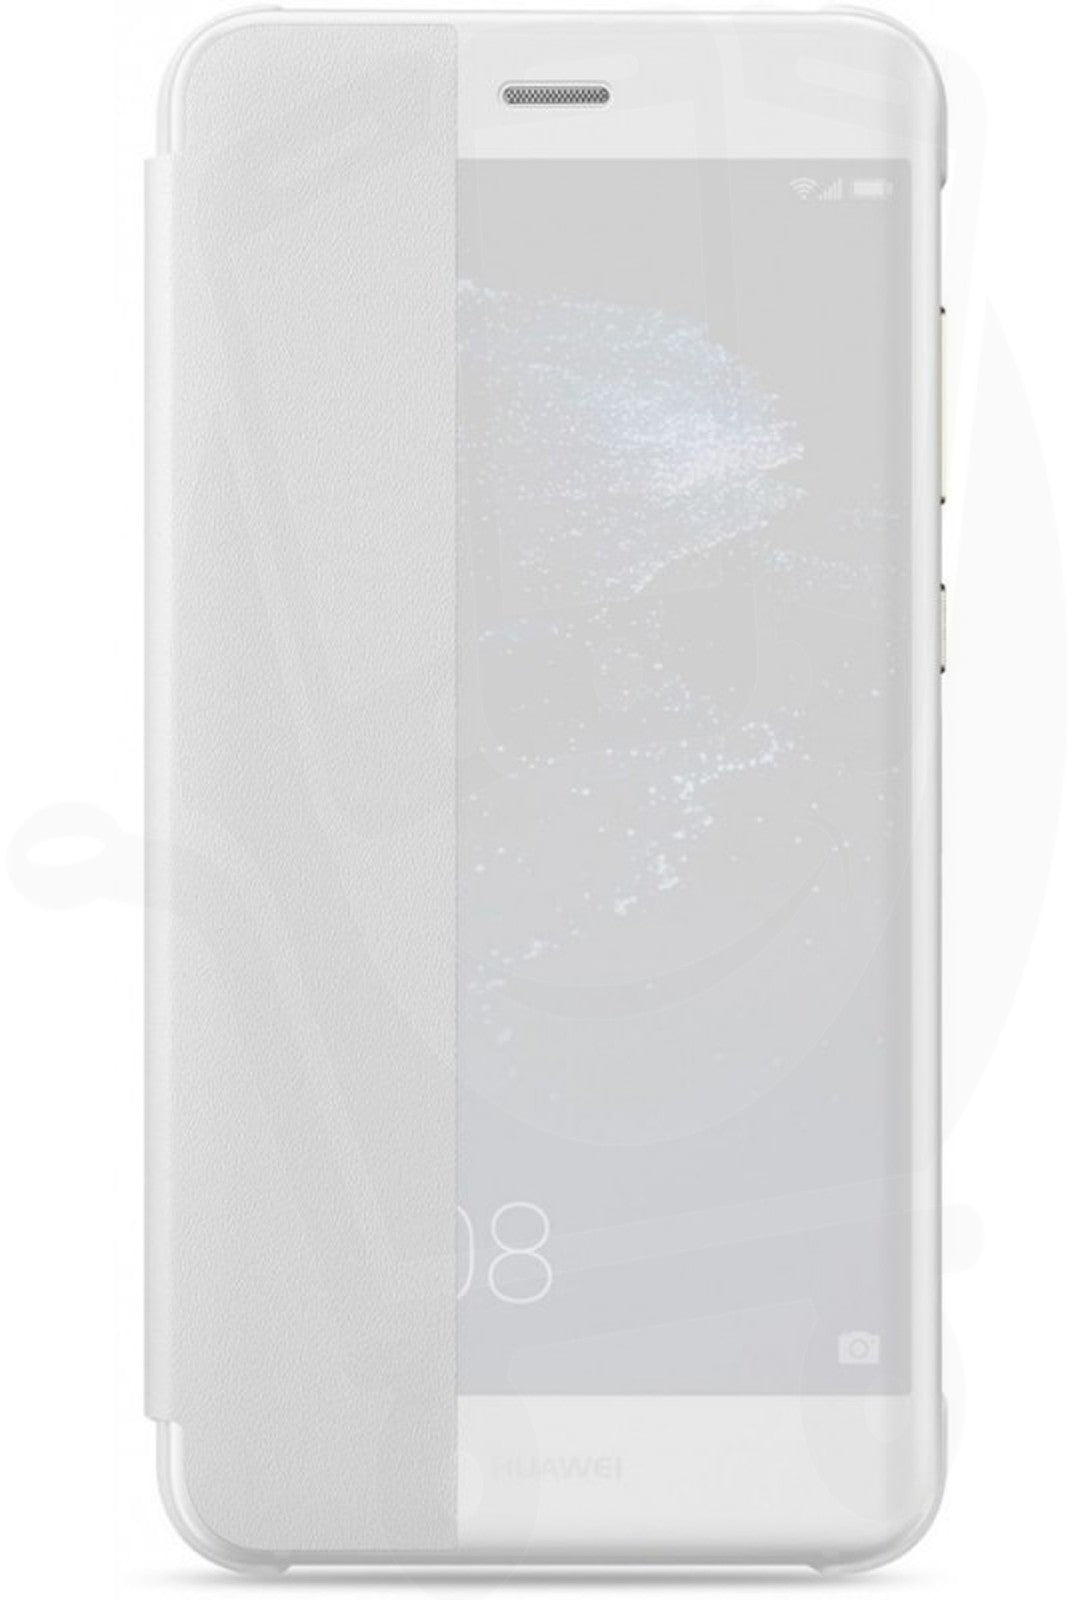 Huawei Capa Flip View Cover para P10 Lite (Branco)